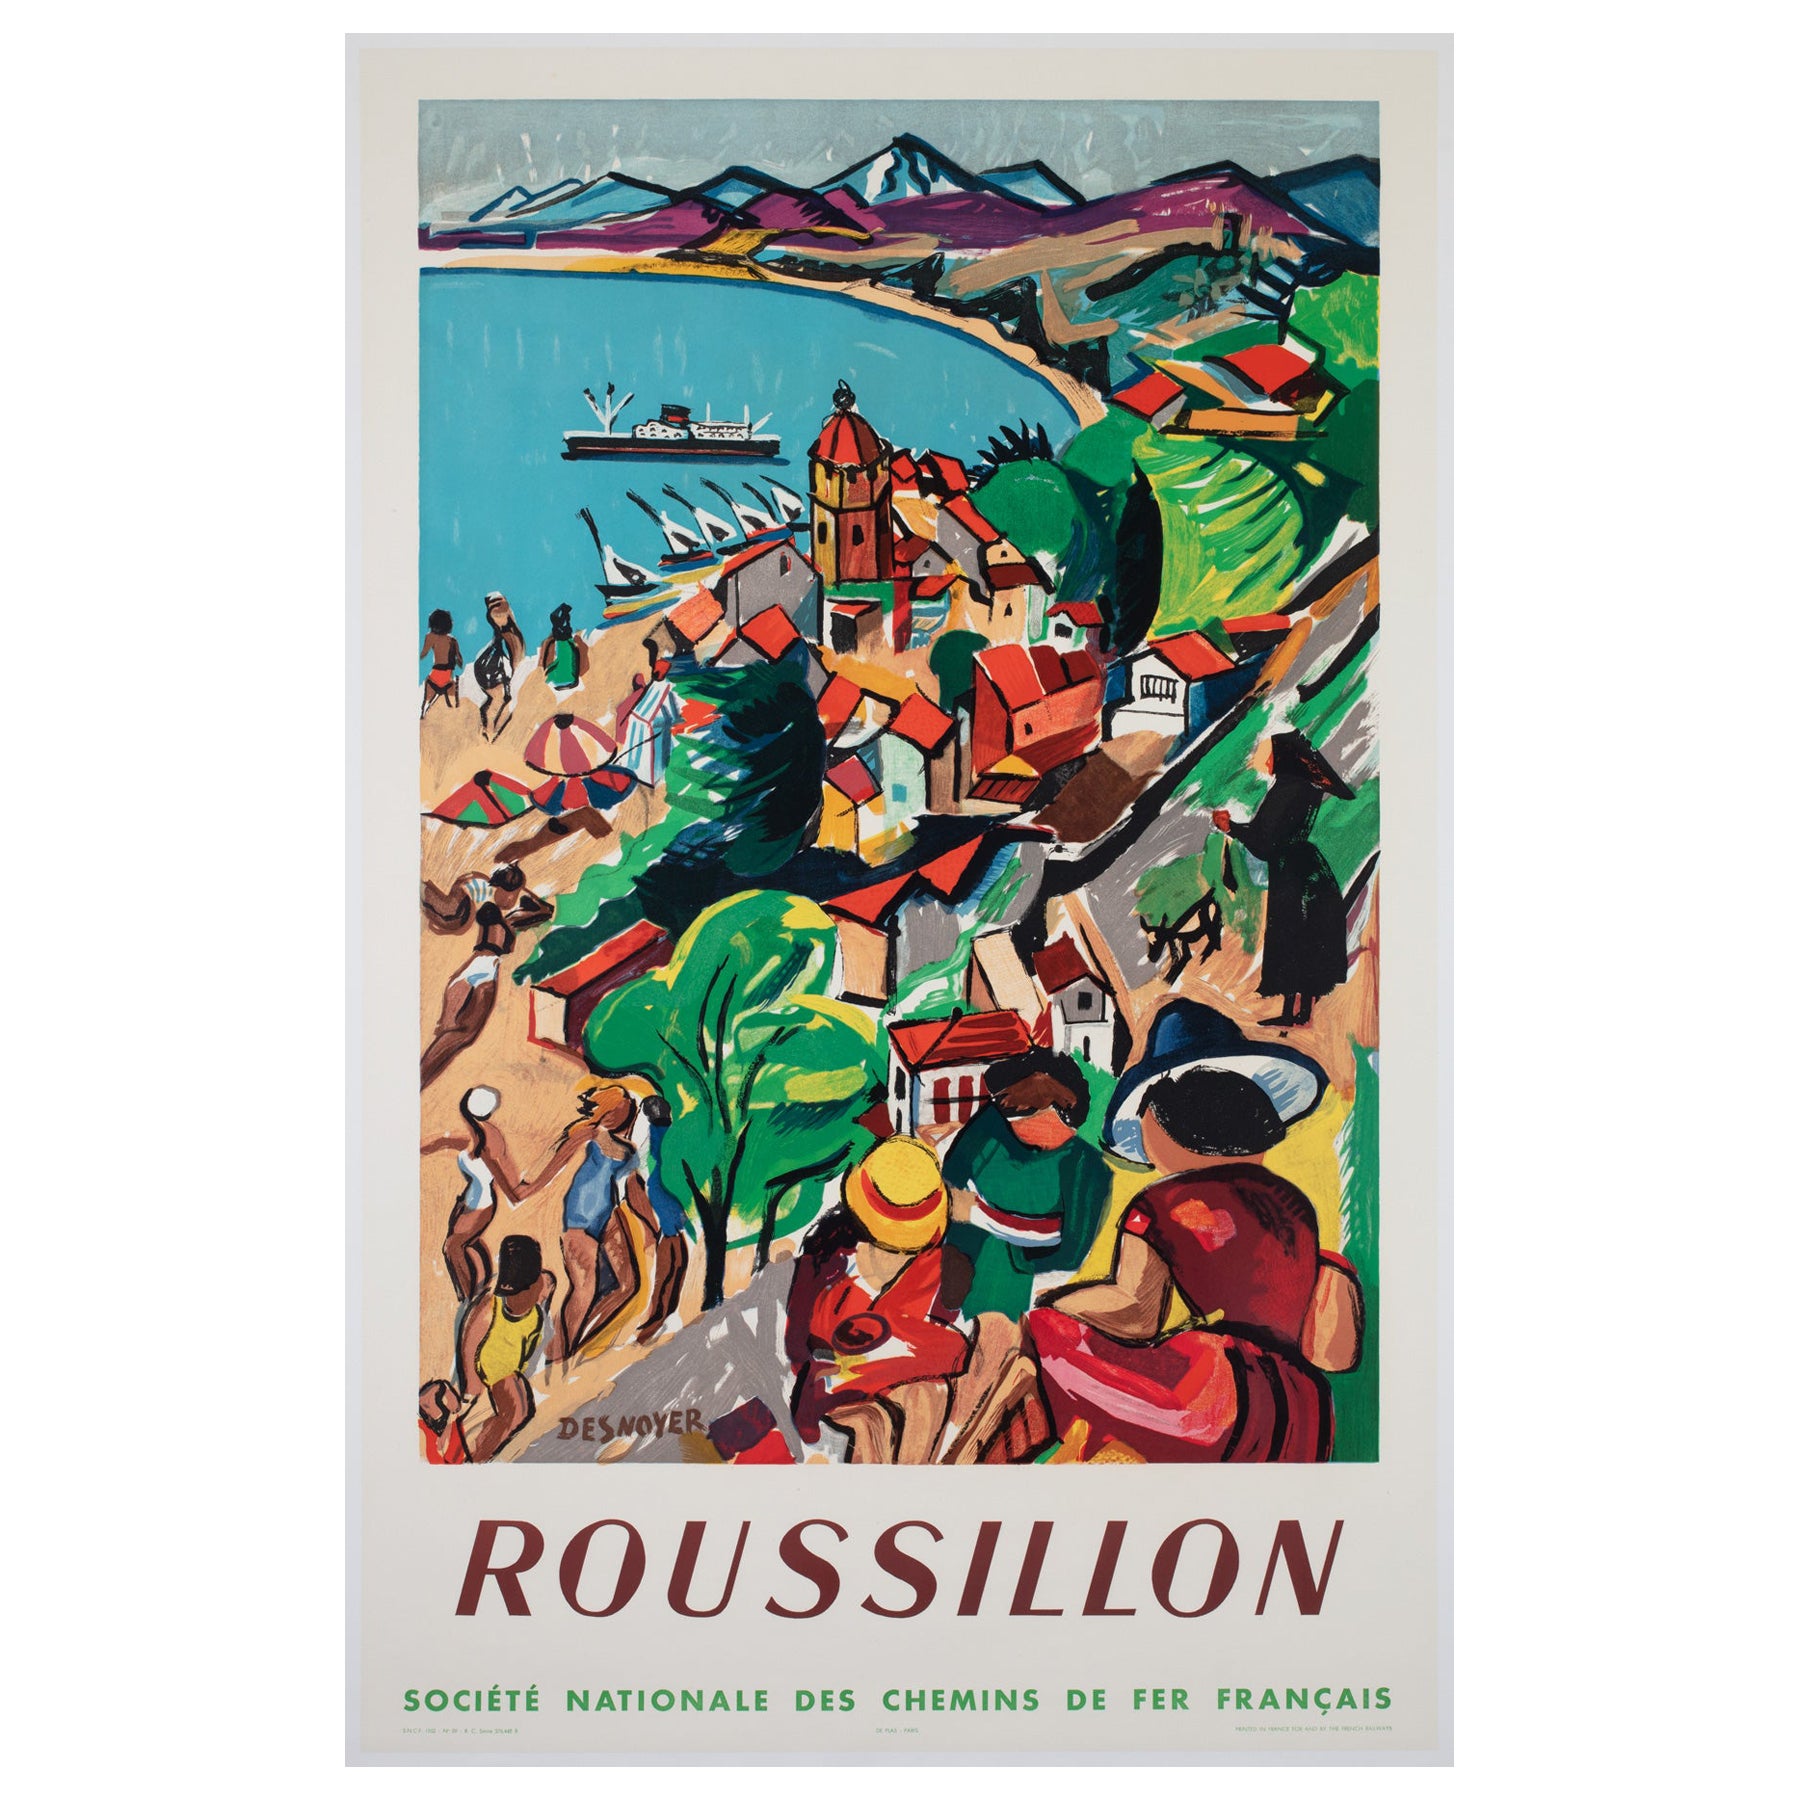 Roussillon 1952 SNCF French Railway Travel Advertising Poster, Desnoyer